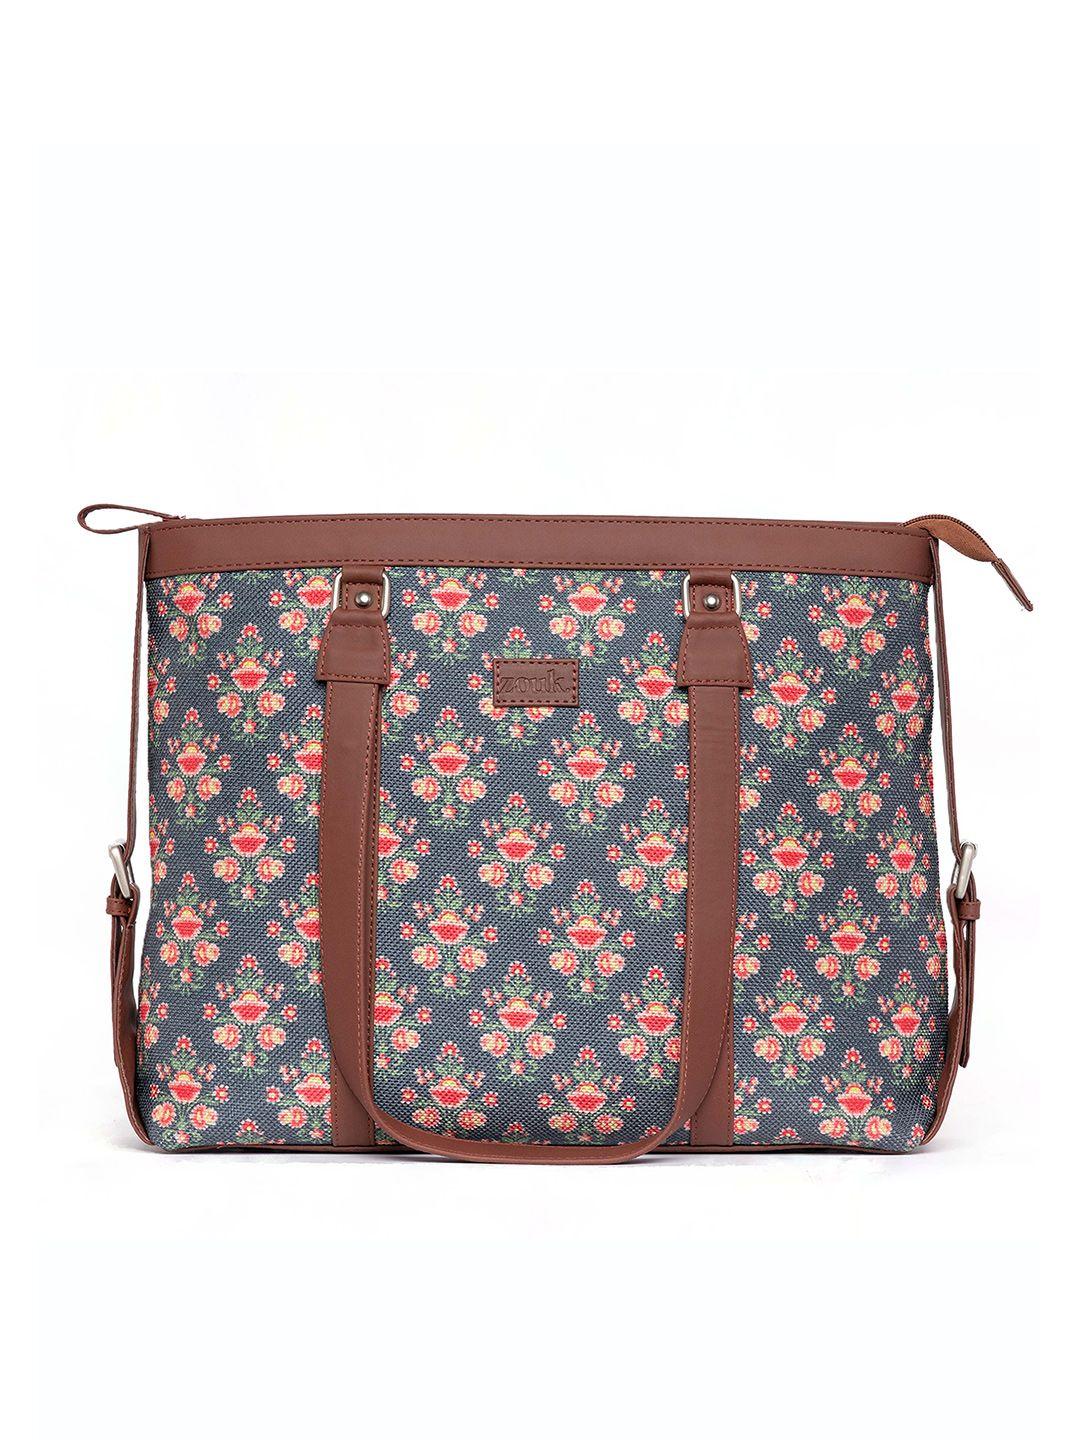 zouk women navy blue & brown floral laptop structured bag